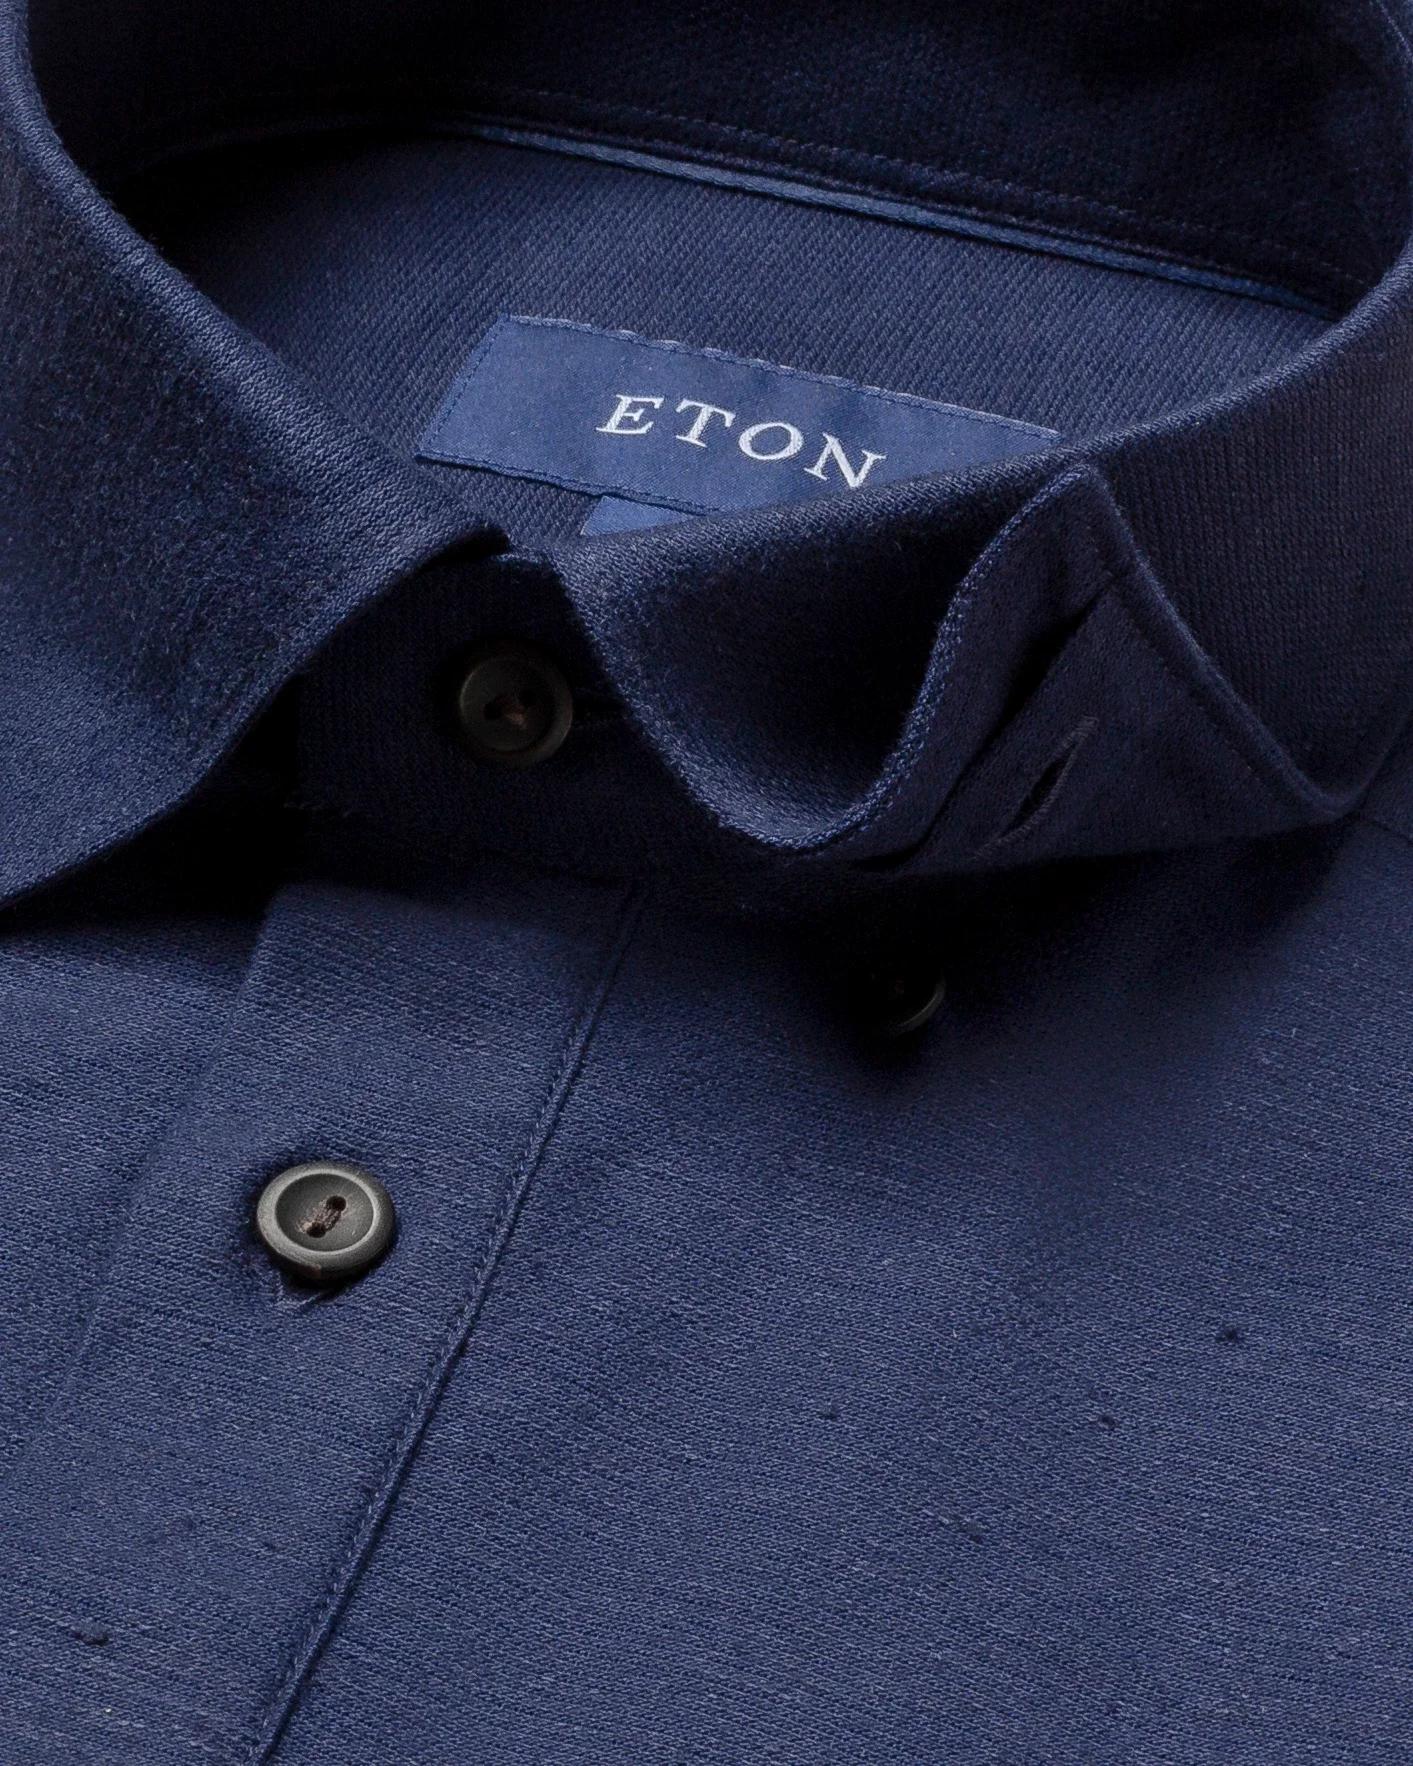 Eton - dark blue cotton linen polo shirt short sleeved